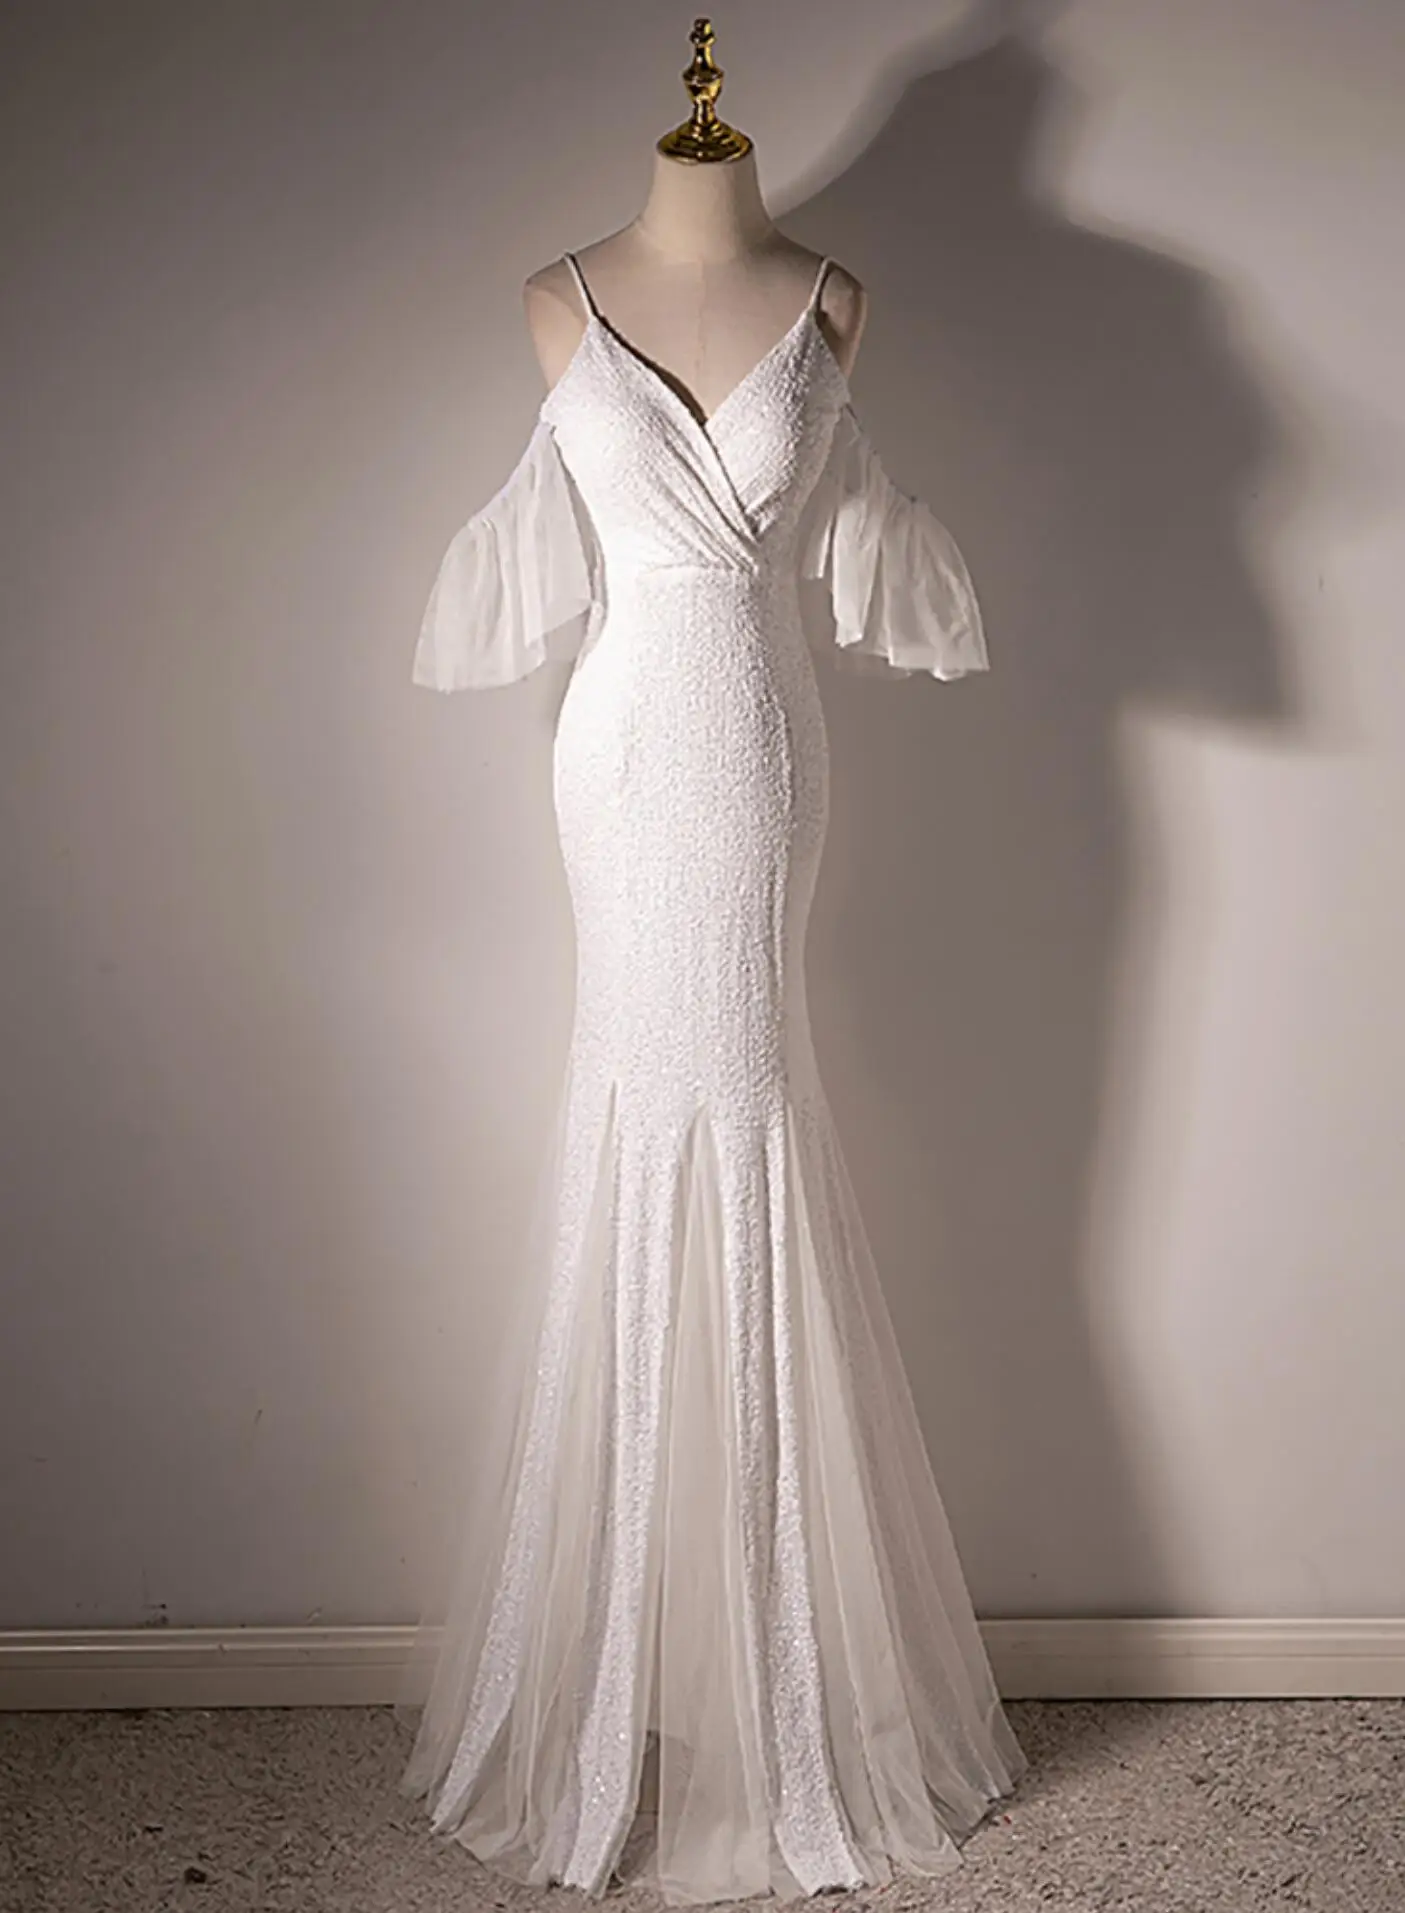 Gorgeous Women White Evening Dress Summer V-neck Off The Shoulder Sequined Gown Femme High Waist Slim Solid Floor Length Dresses